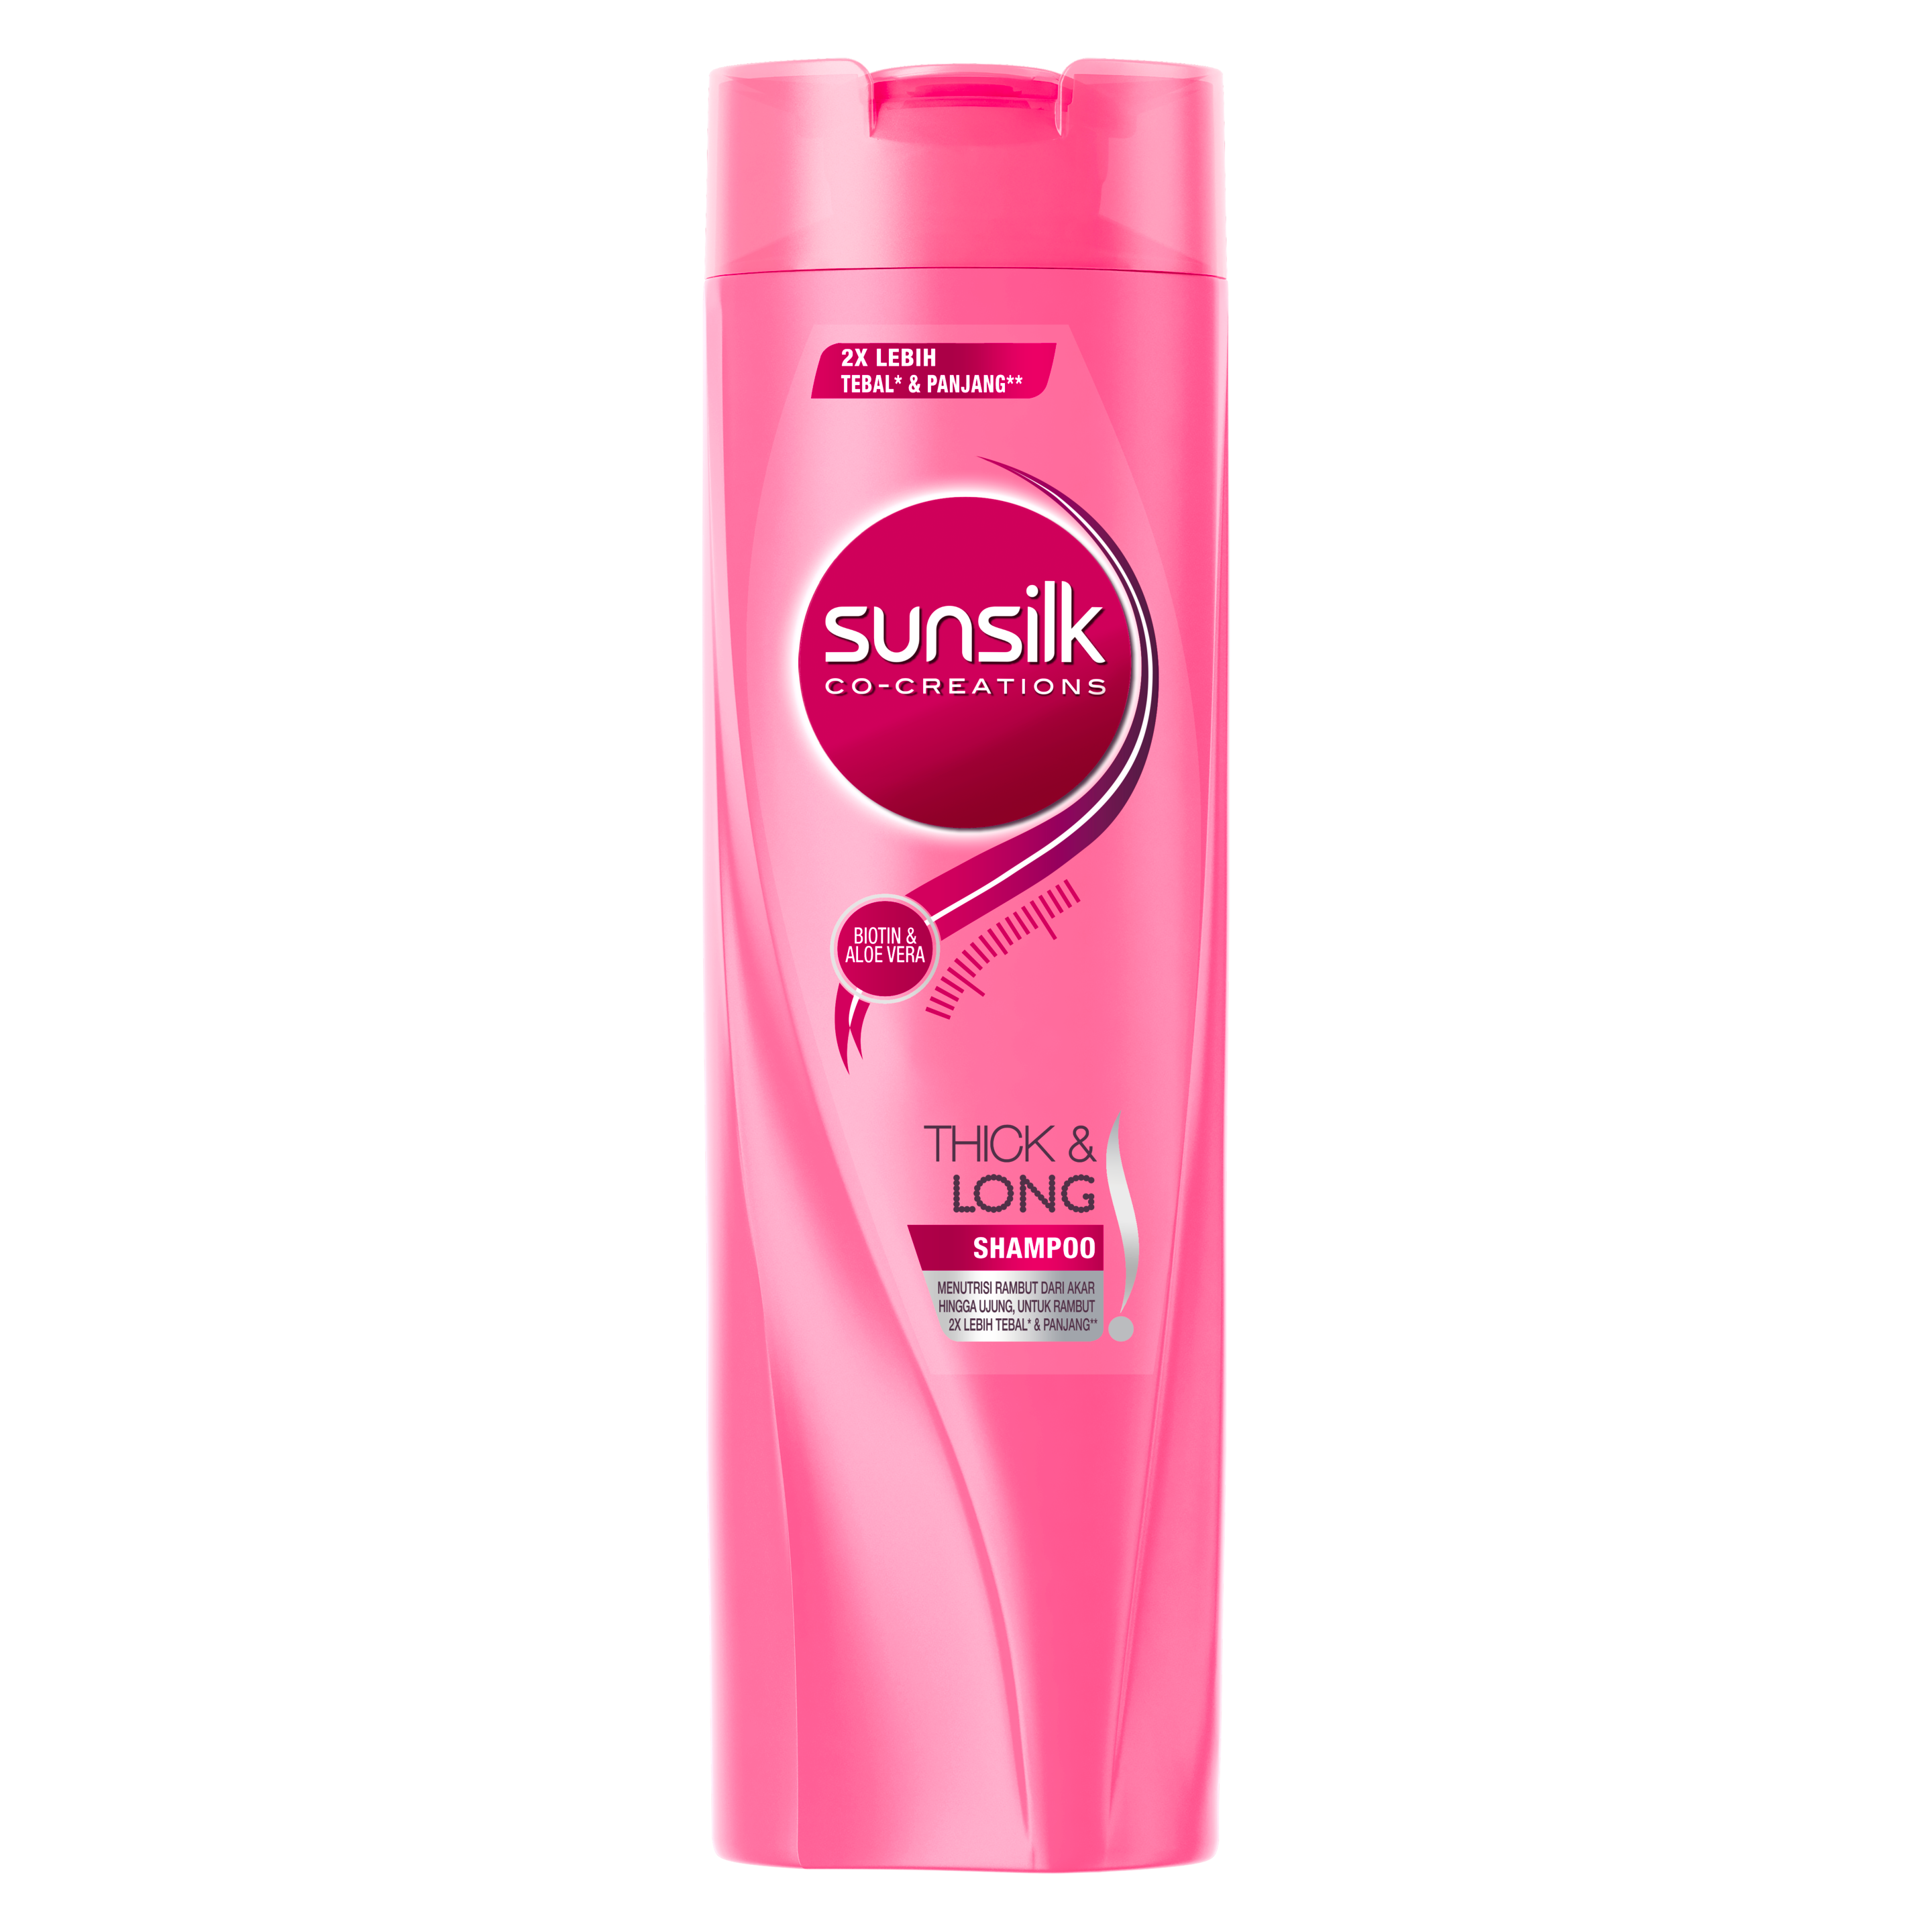 Sunsilk Thick & Long Shampoo 170ml